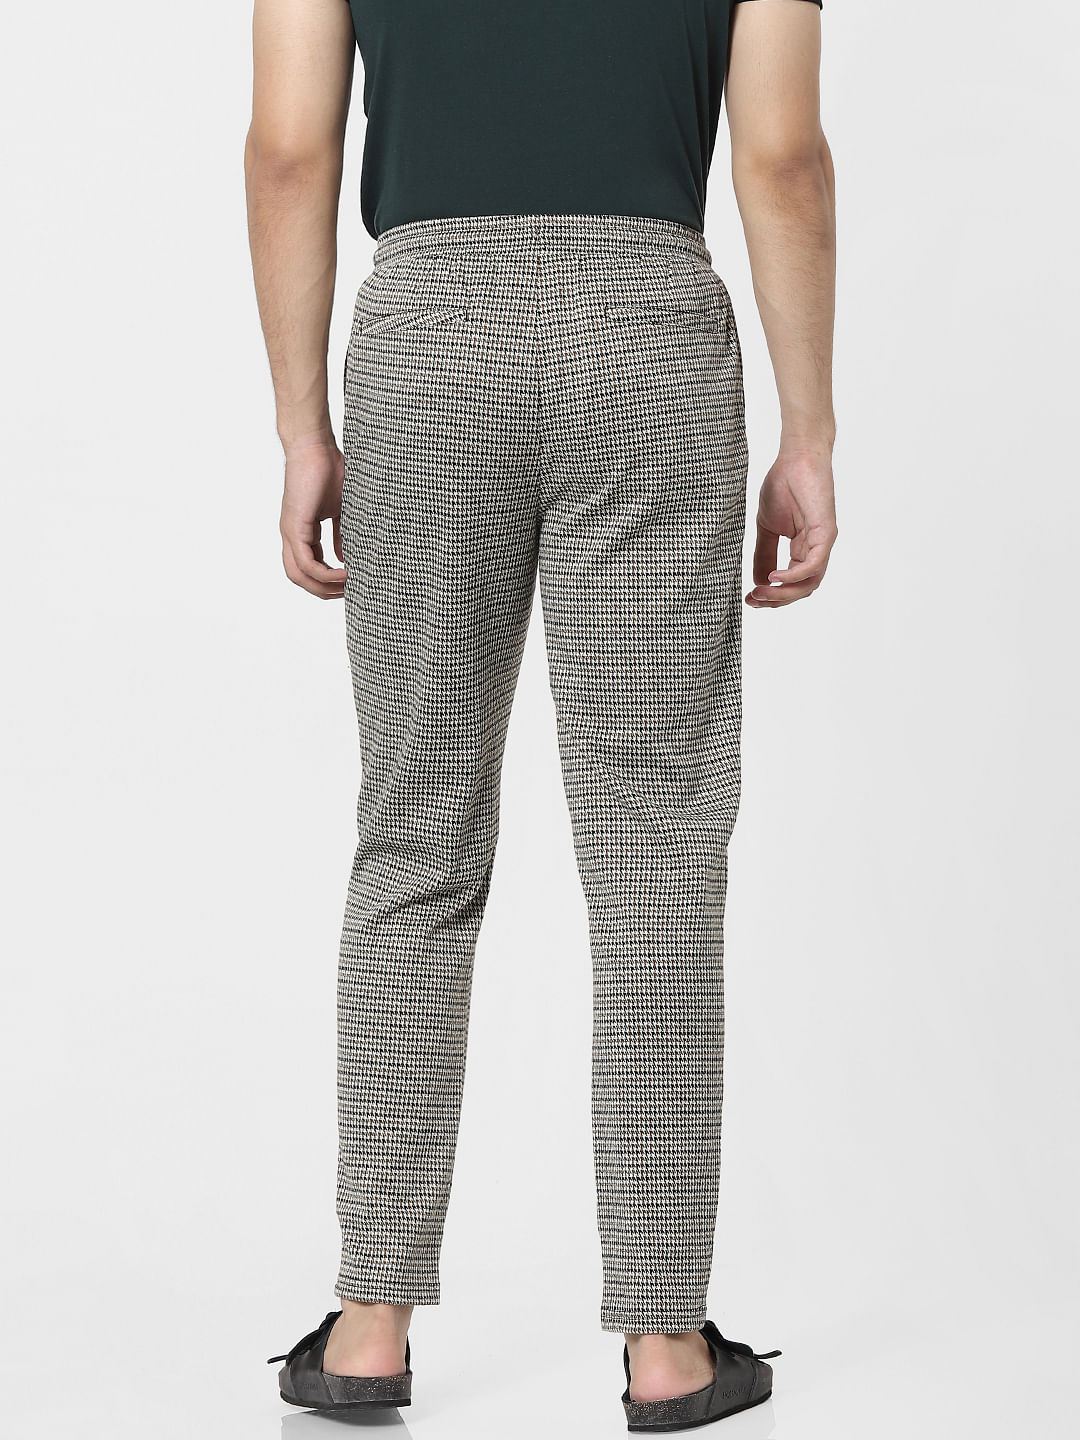 Buy Black  Grey Trousers  Pants for Men by Garcon Online  Ajiocom